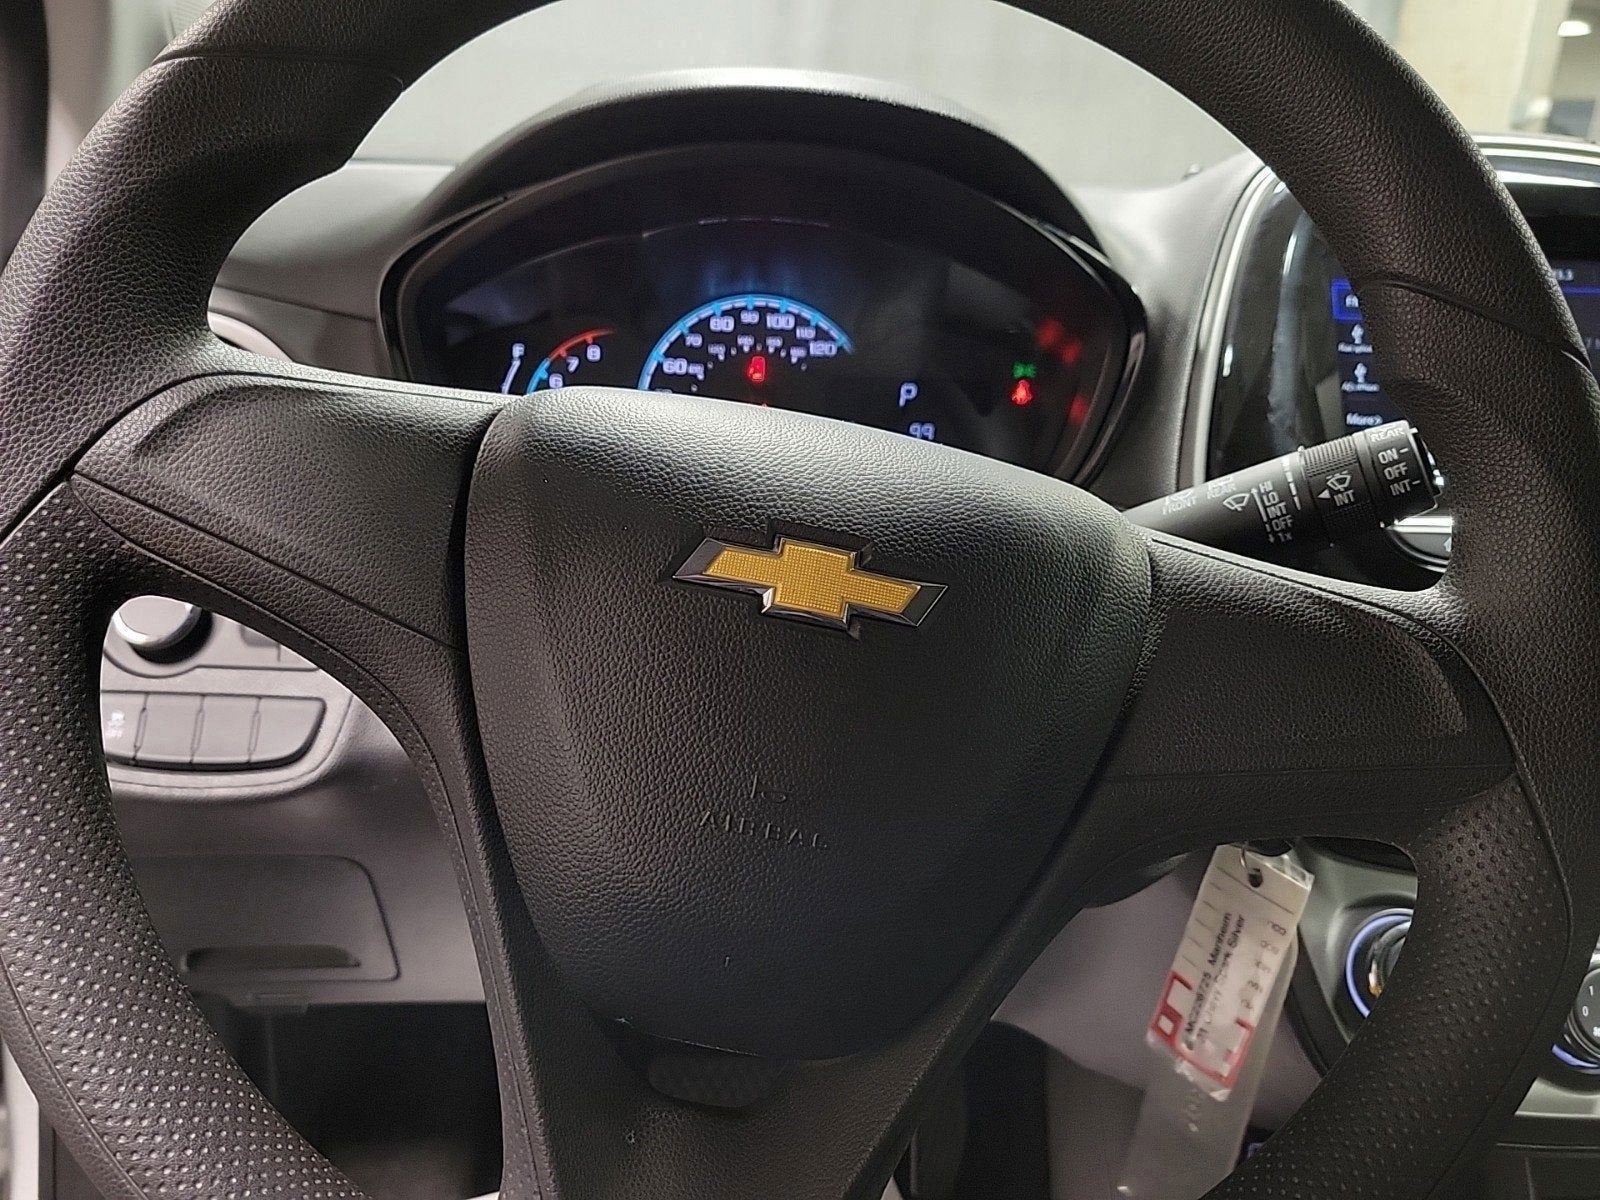 2021 Chevrolet Spark LS